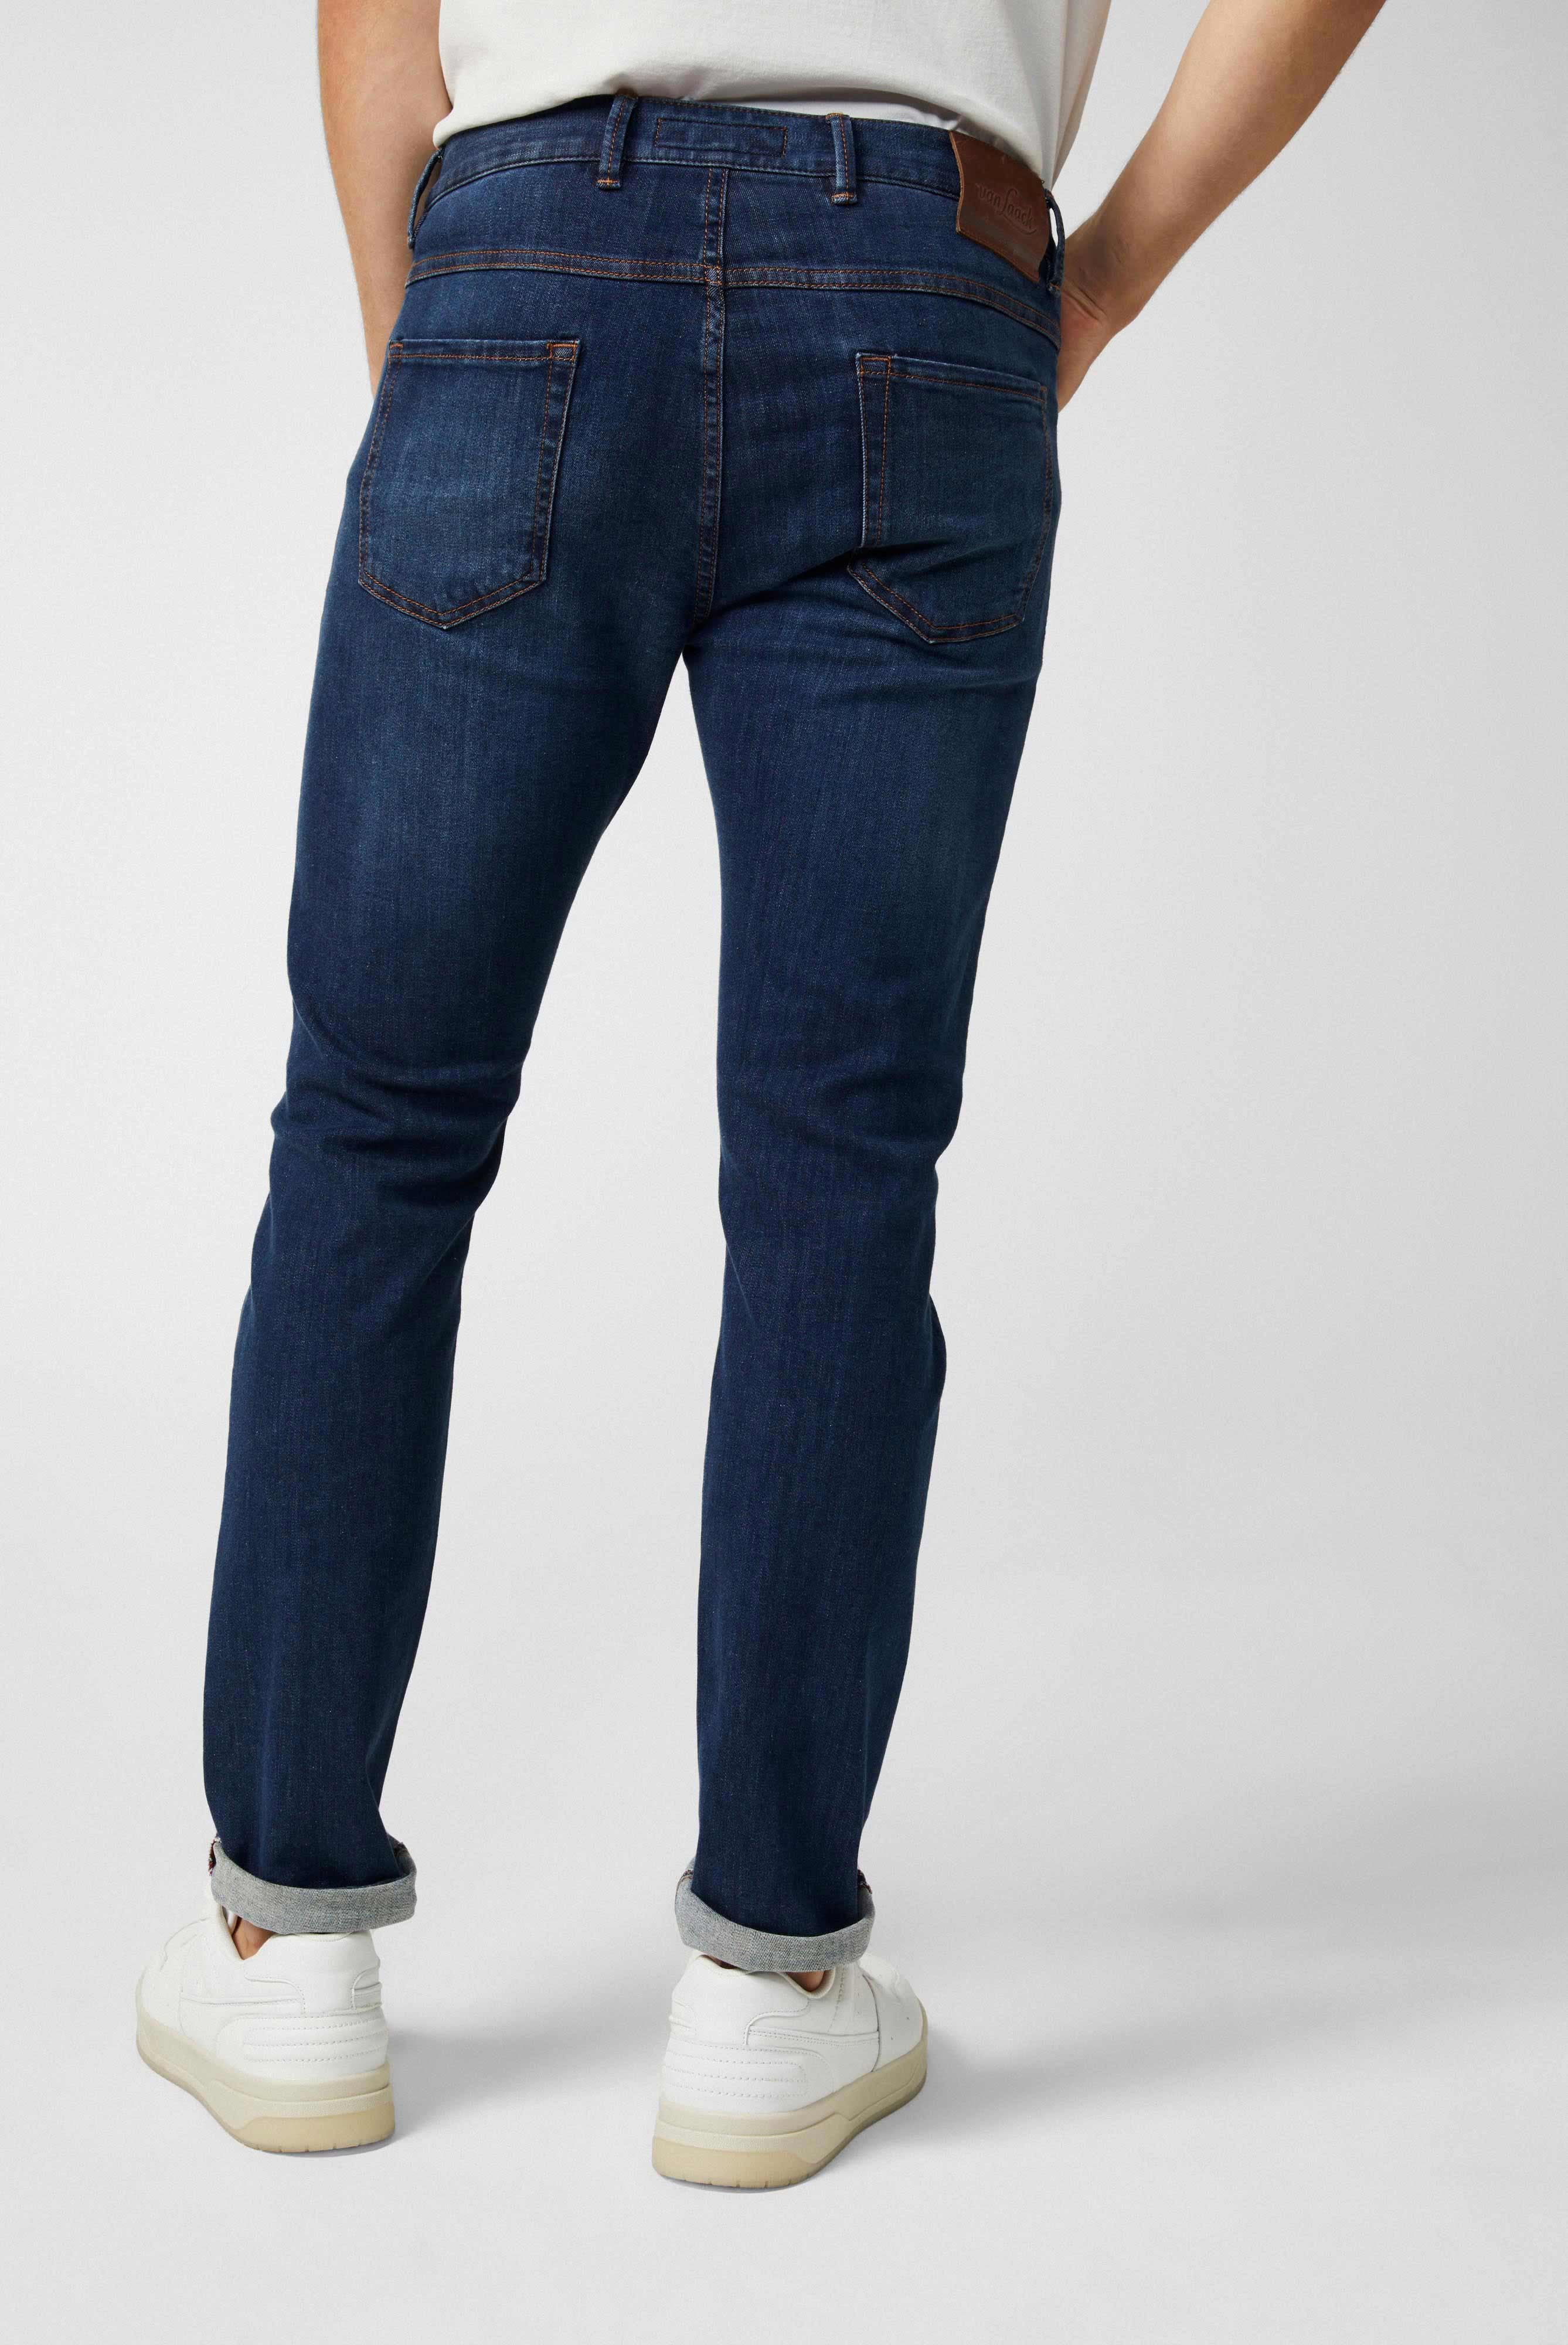 Jeans & Hosen+Jeanshose mit Streth Slim Fit+80.7857..J00117.780.33N